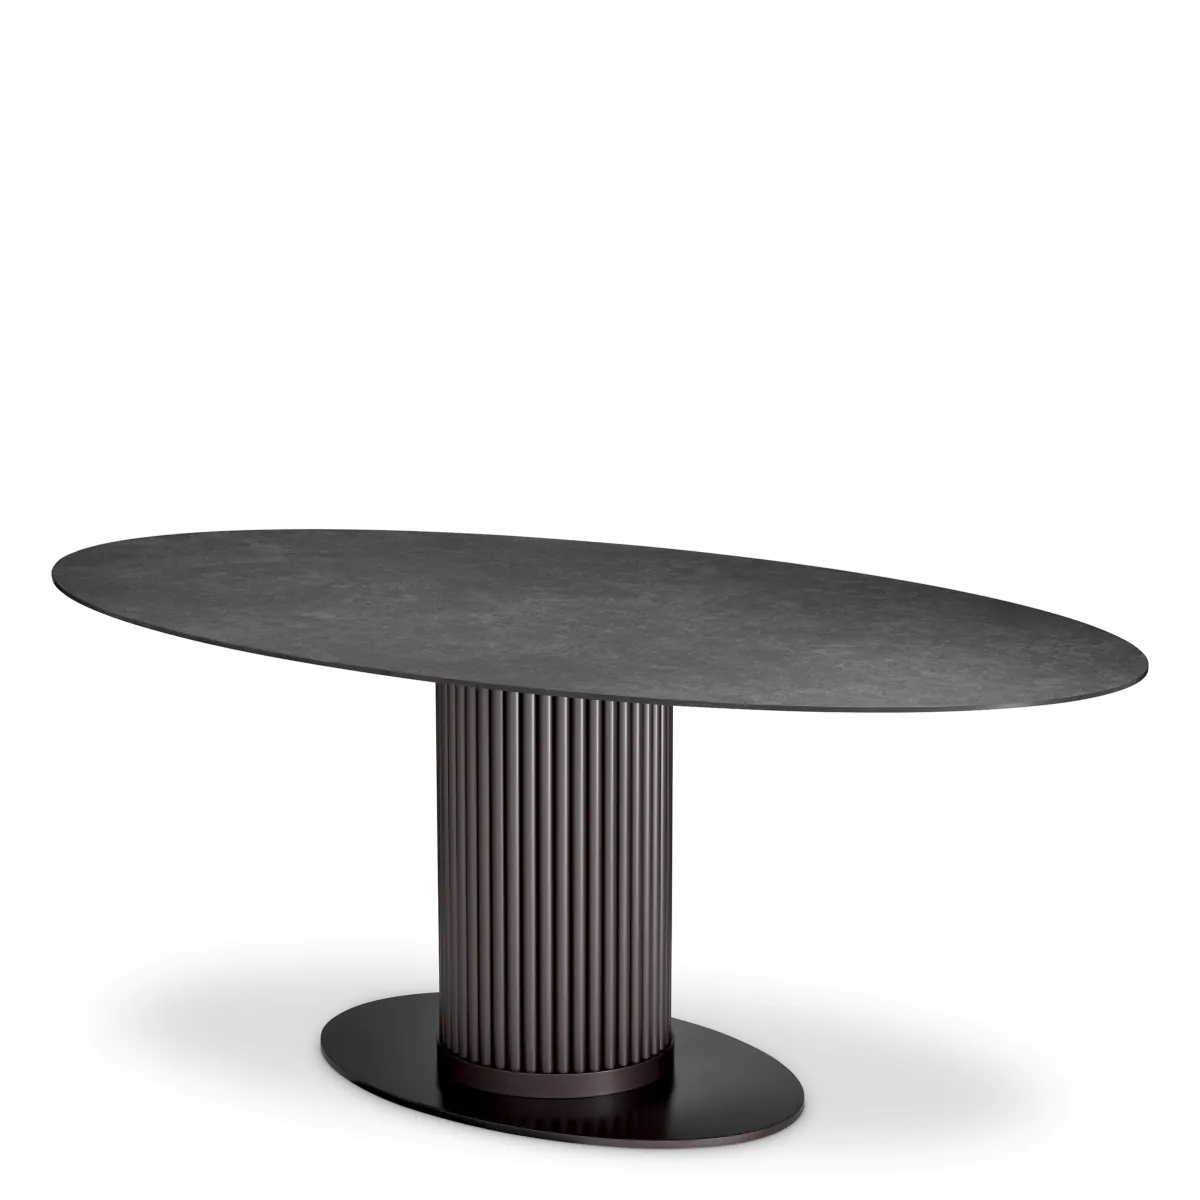 Volterra table